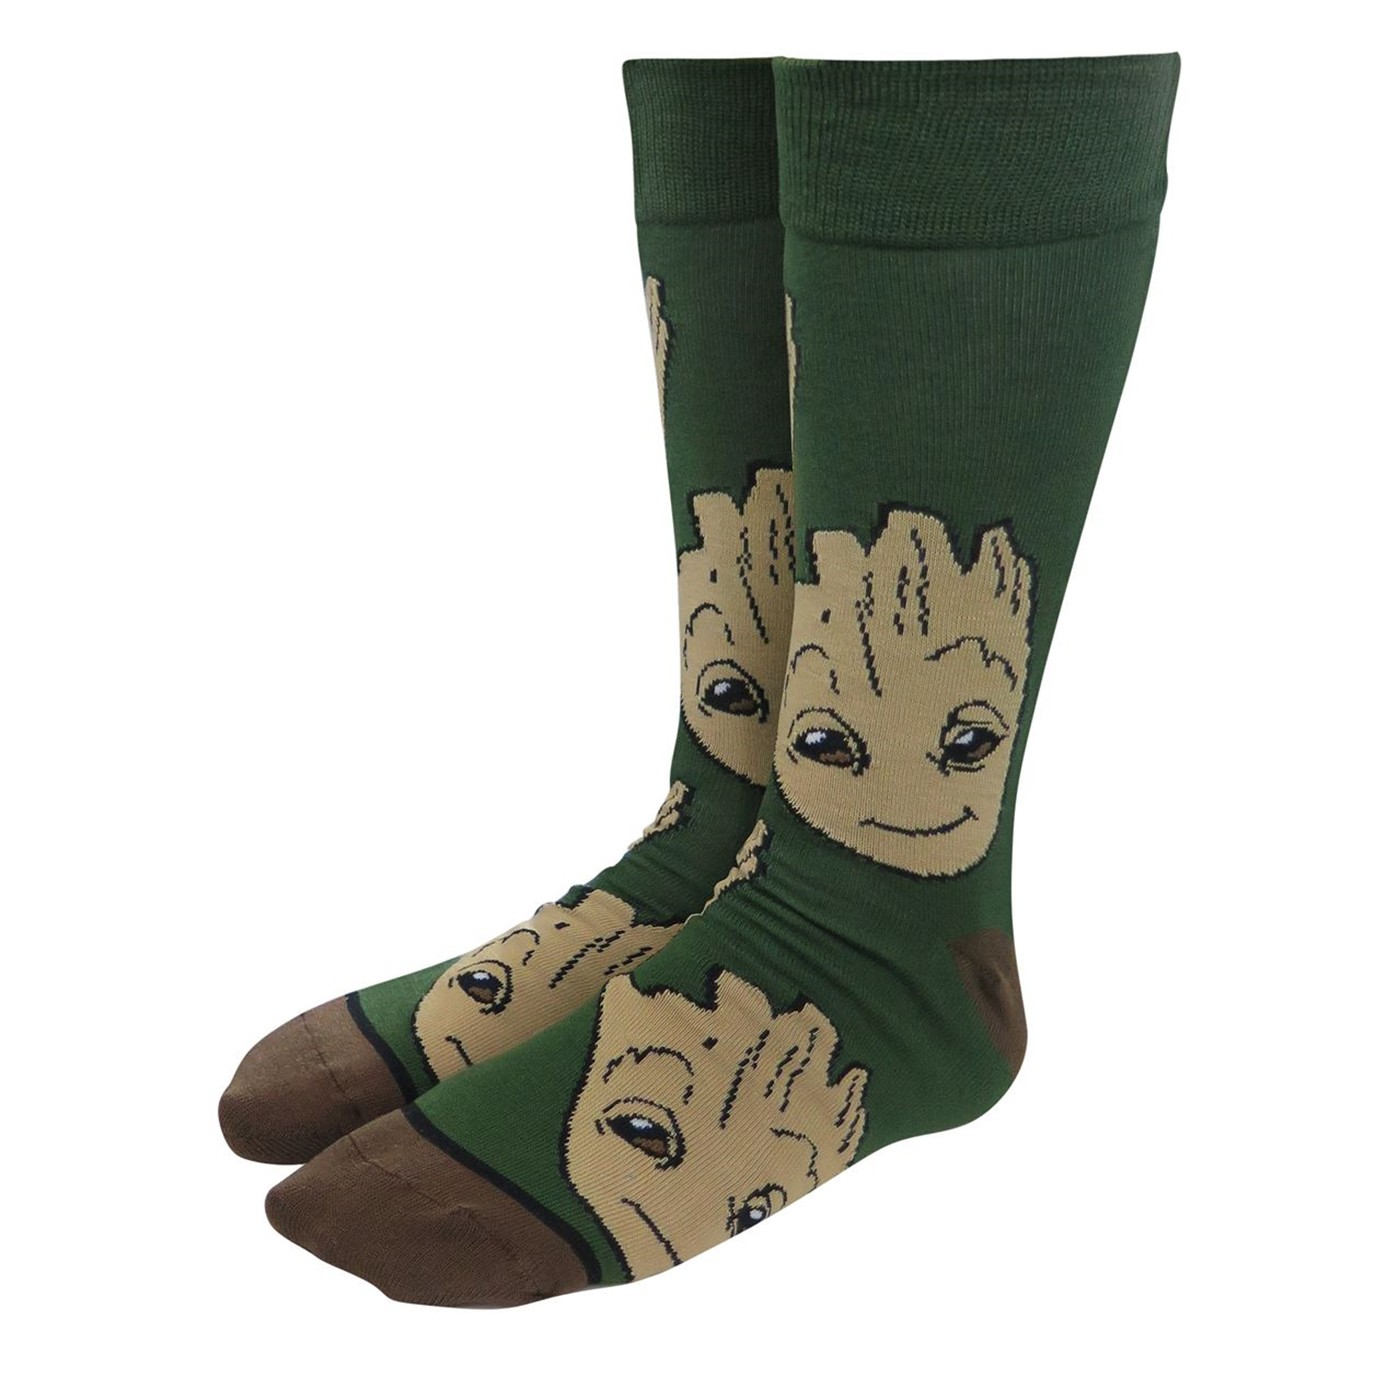 GOTG Cute Baby Groot Crew Socks